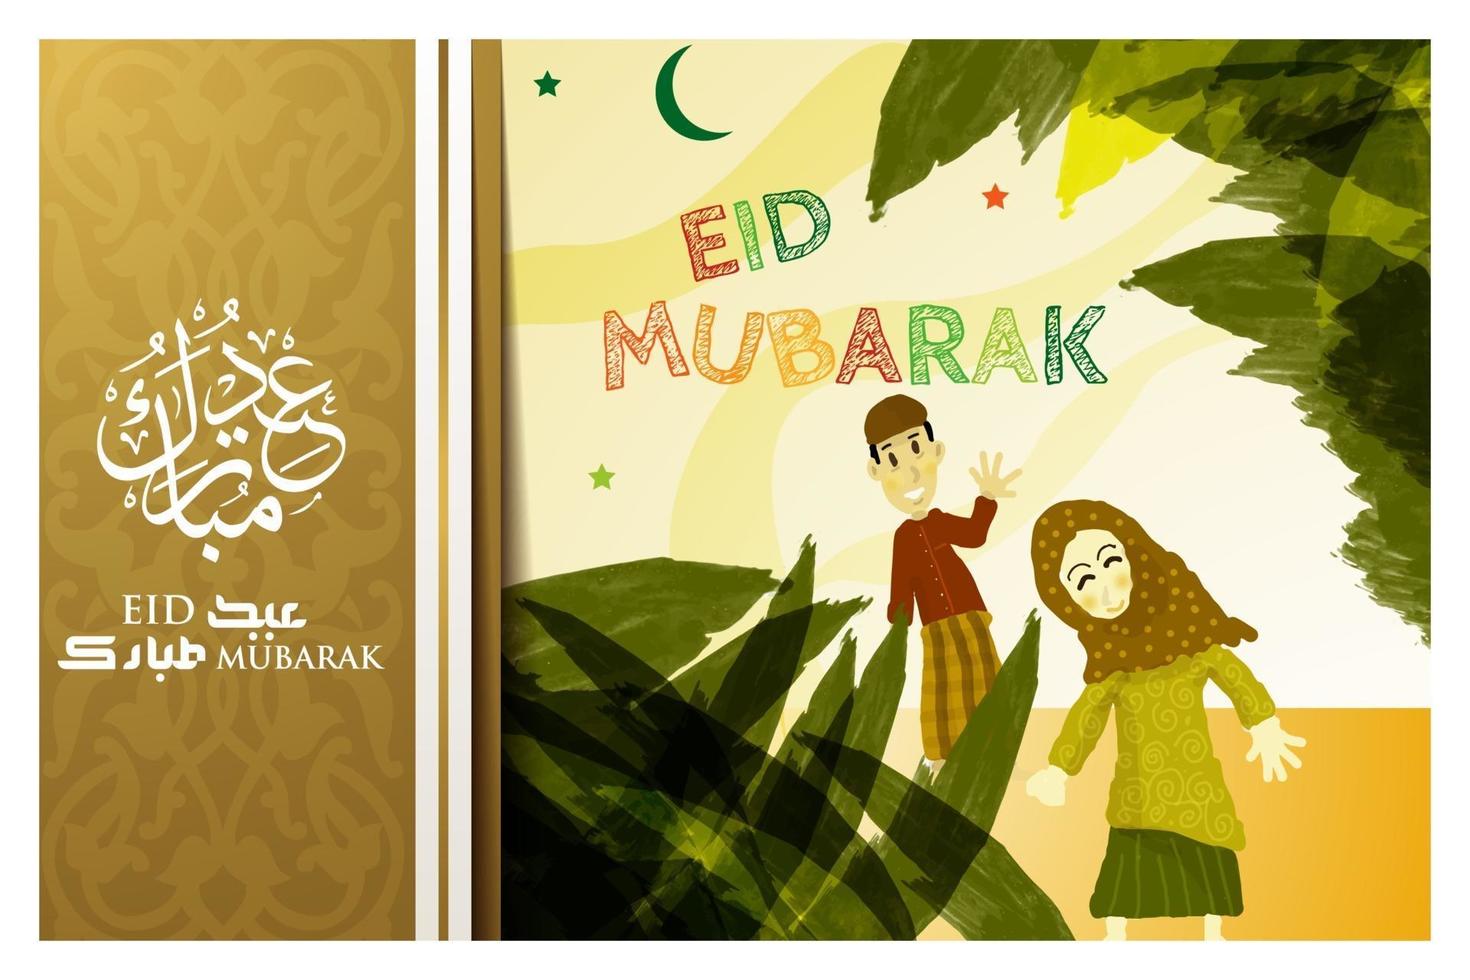 Eid Mubarak Greeting Islamic Illustration background vector design with beautiful arabic calligraphy. translation of text Blessed festival